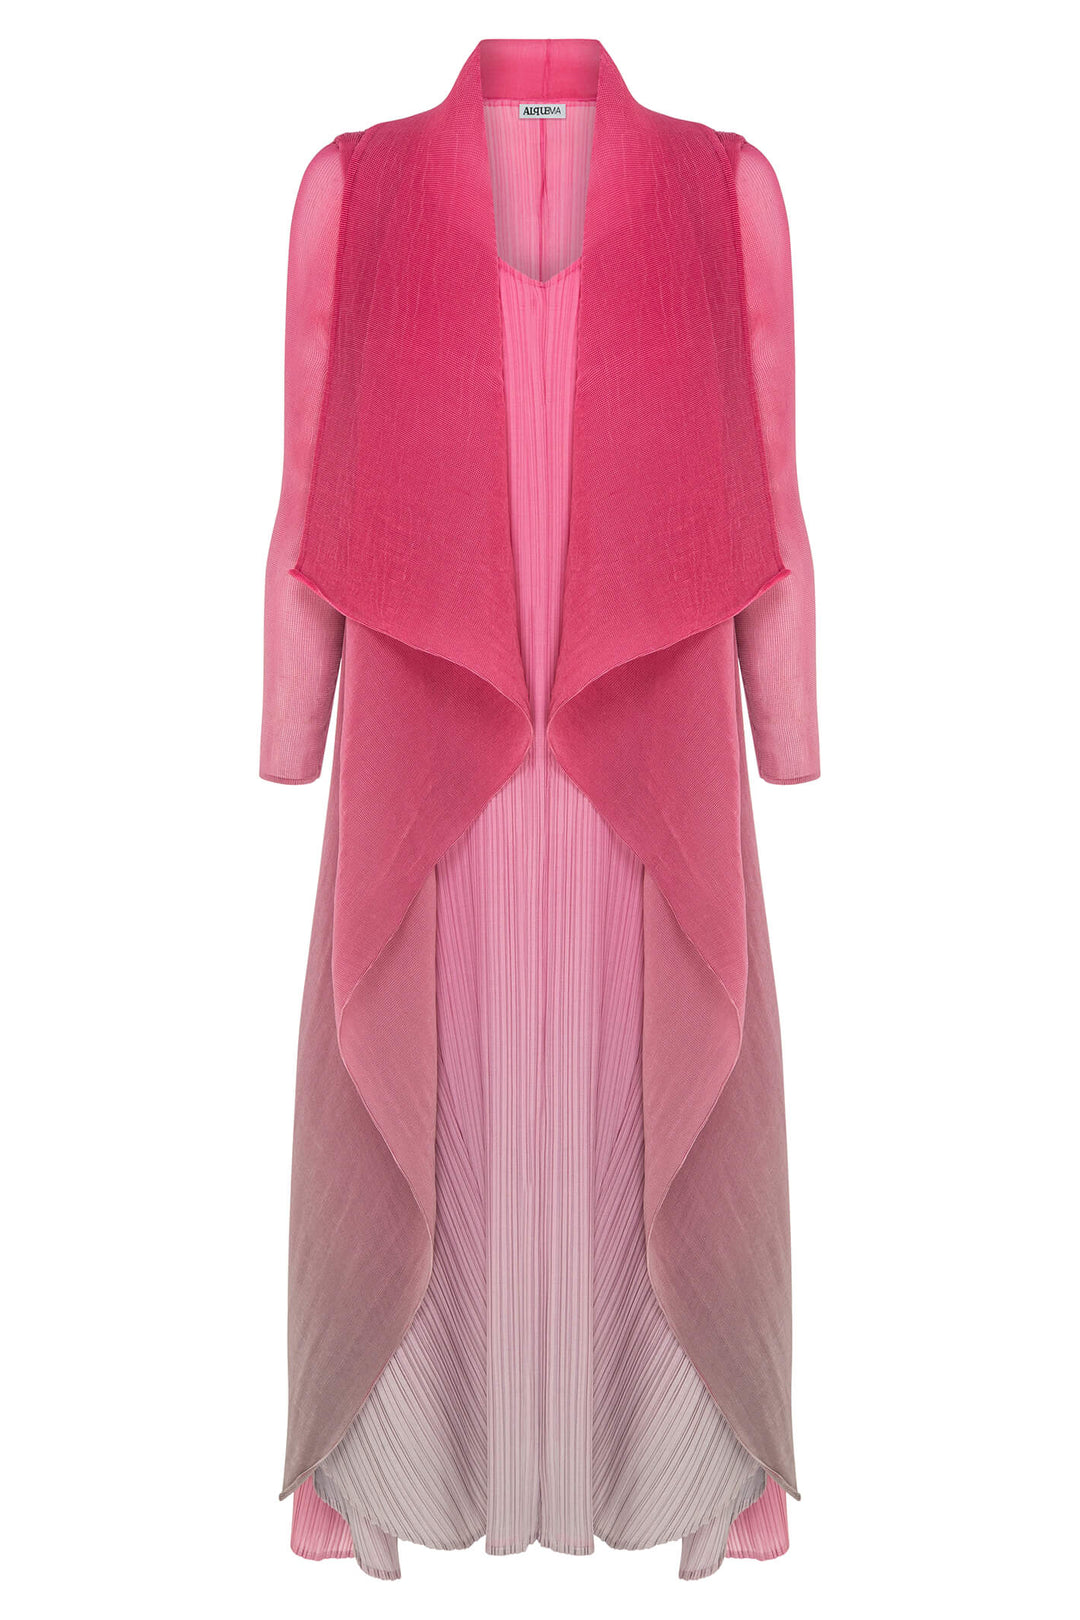 Alquema AC2402 Collare Blossom Ombre Jacket & Dress - Experience Boutique